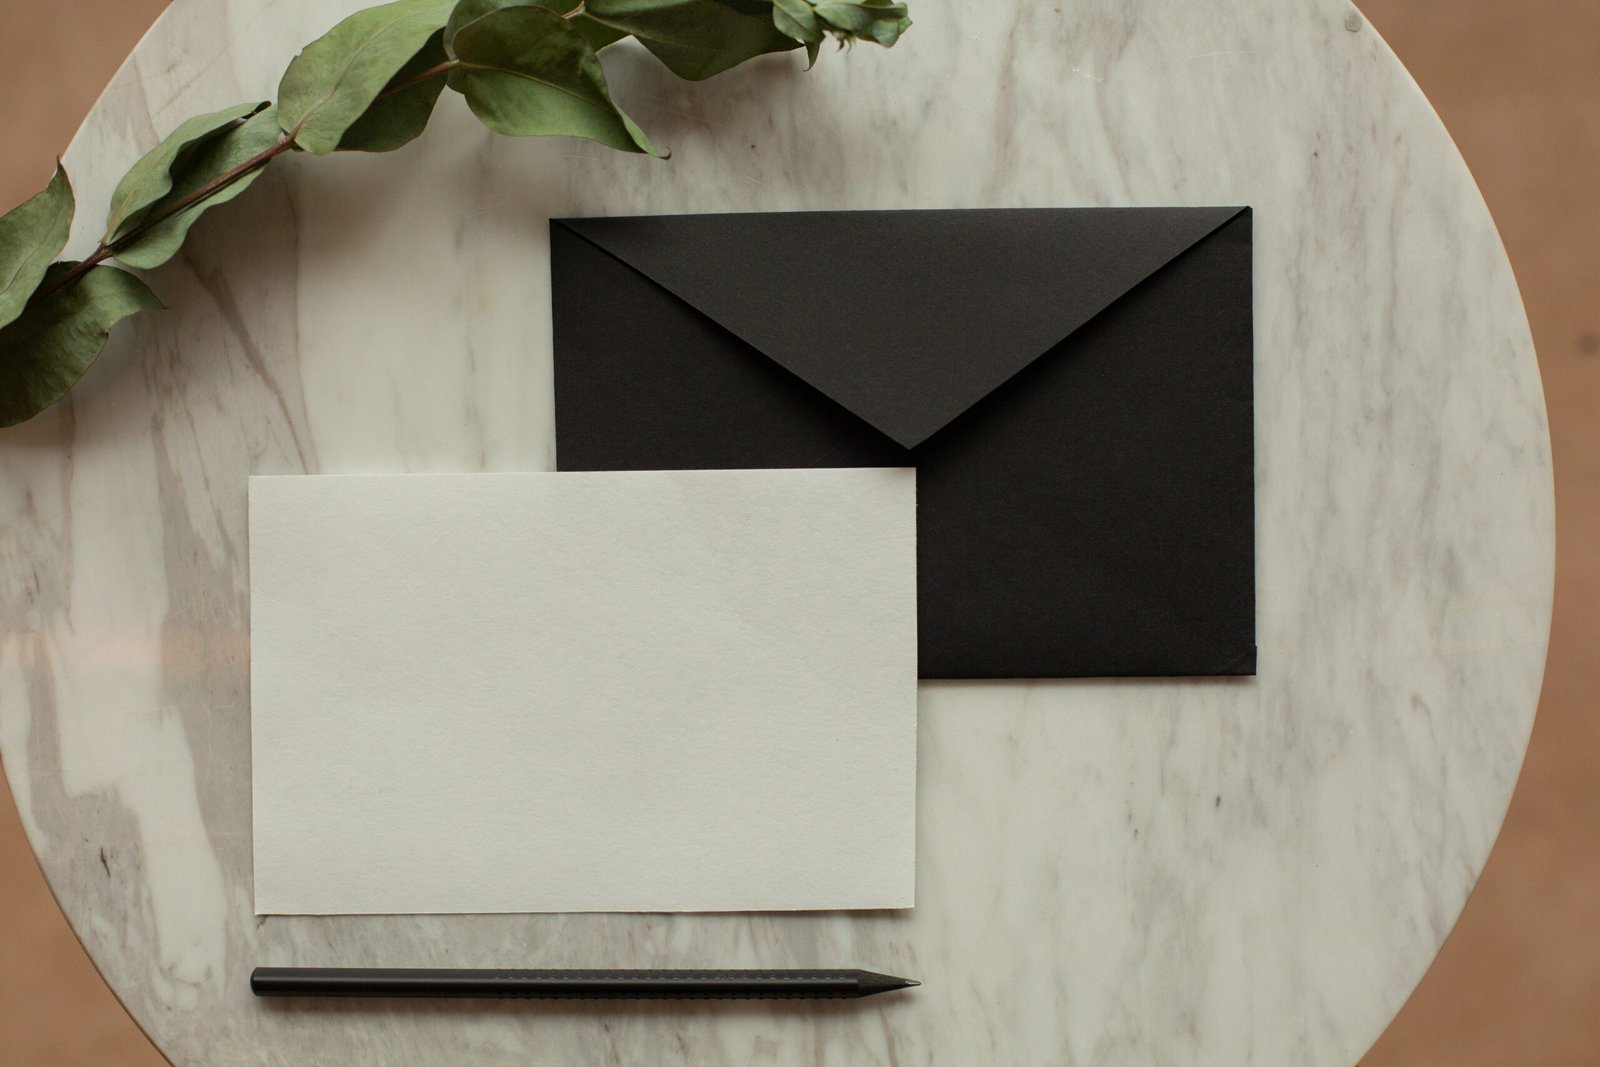 How Do You Send an Envelope of Sympathy to a Family Member?